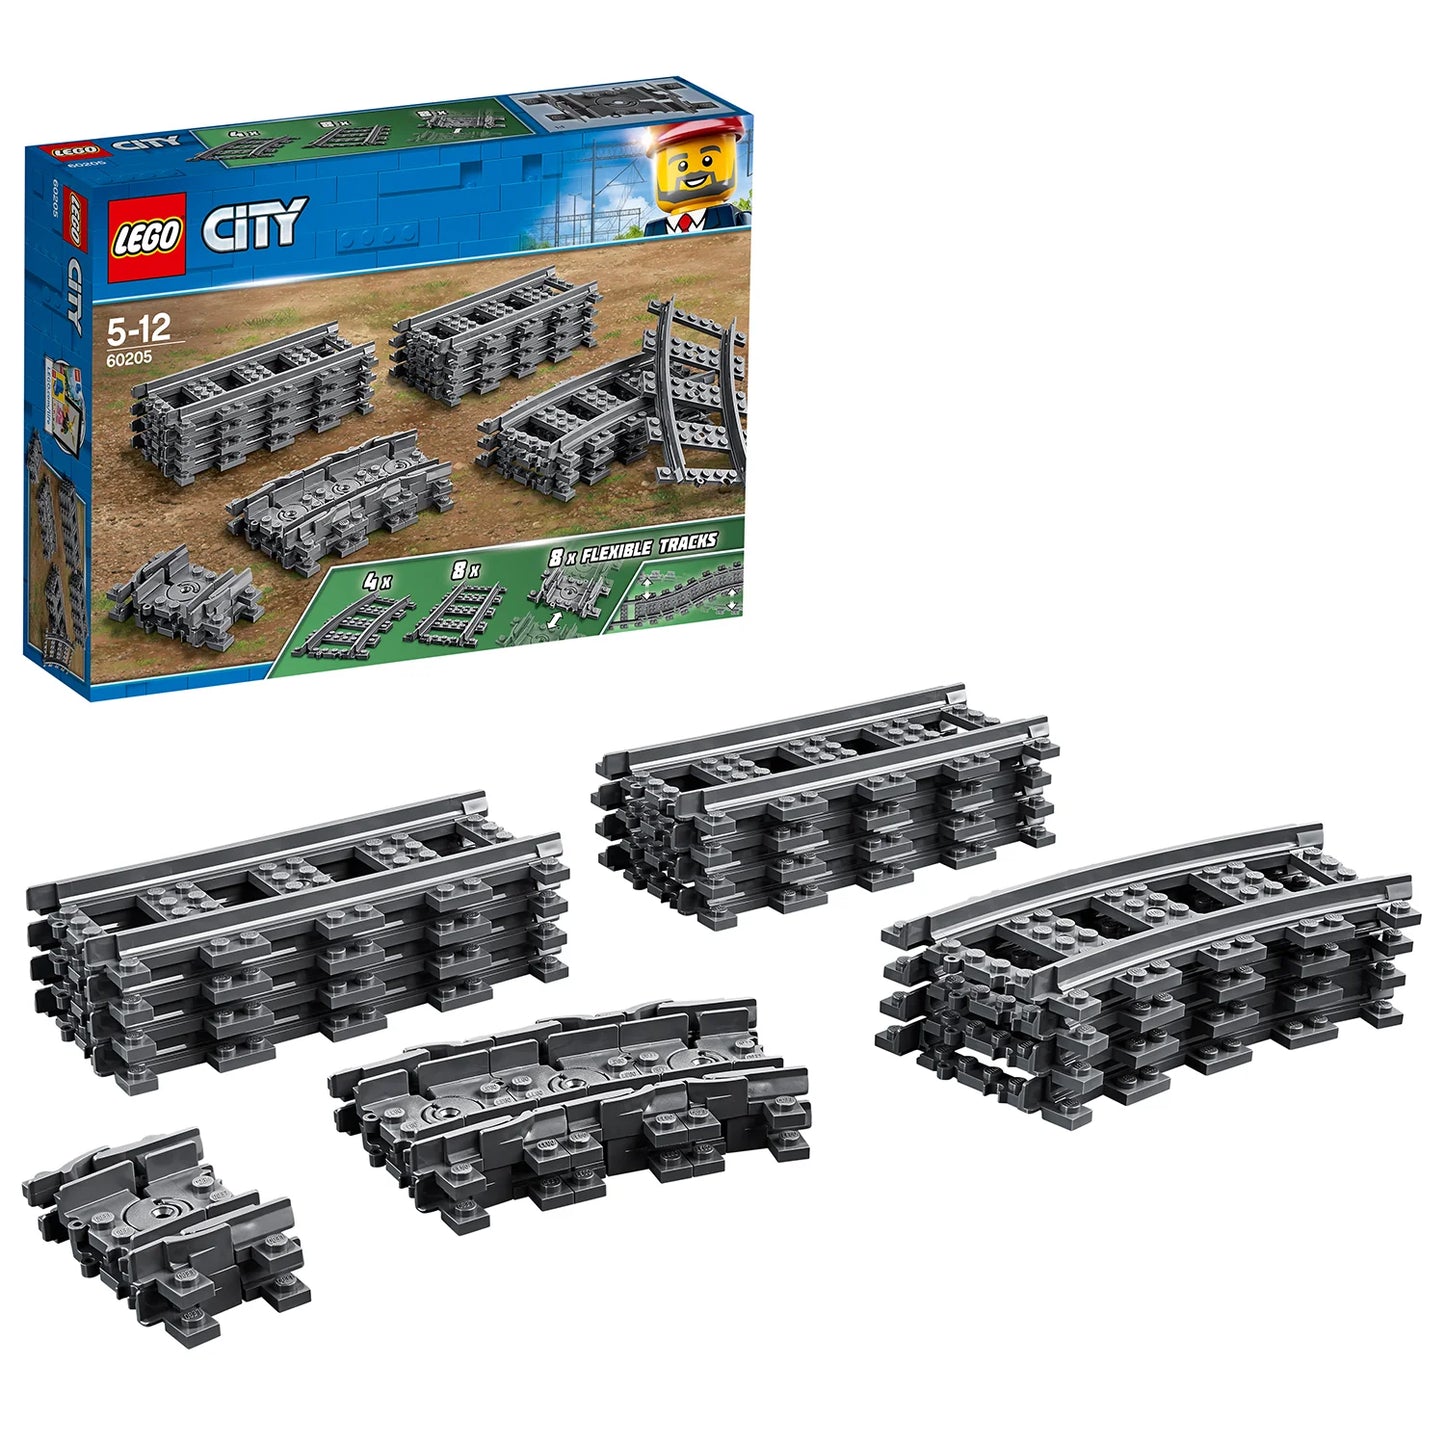 Train tracks (formerly 7499) - LEGO City